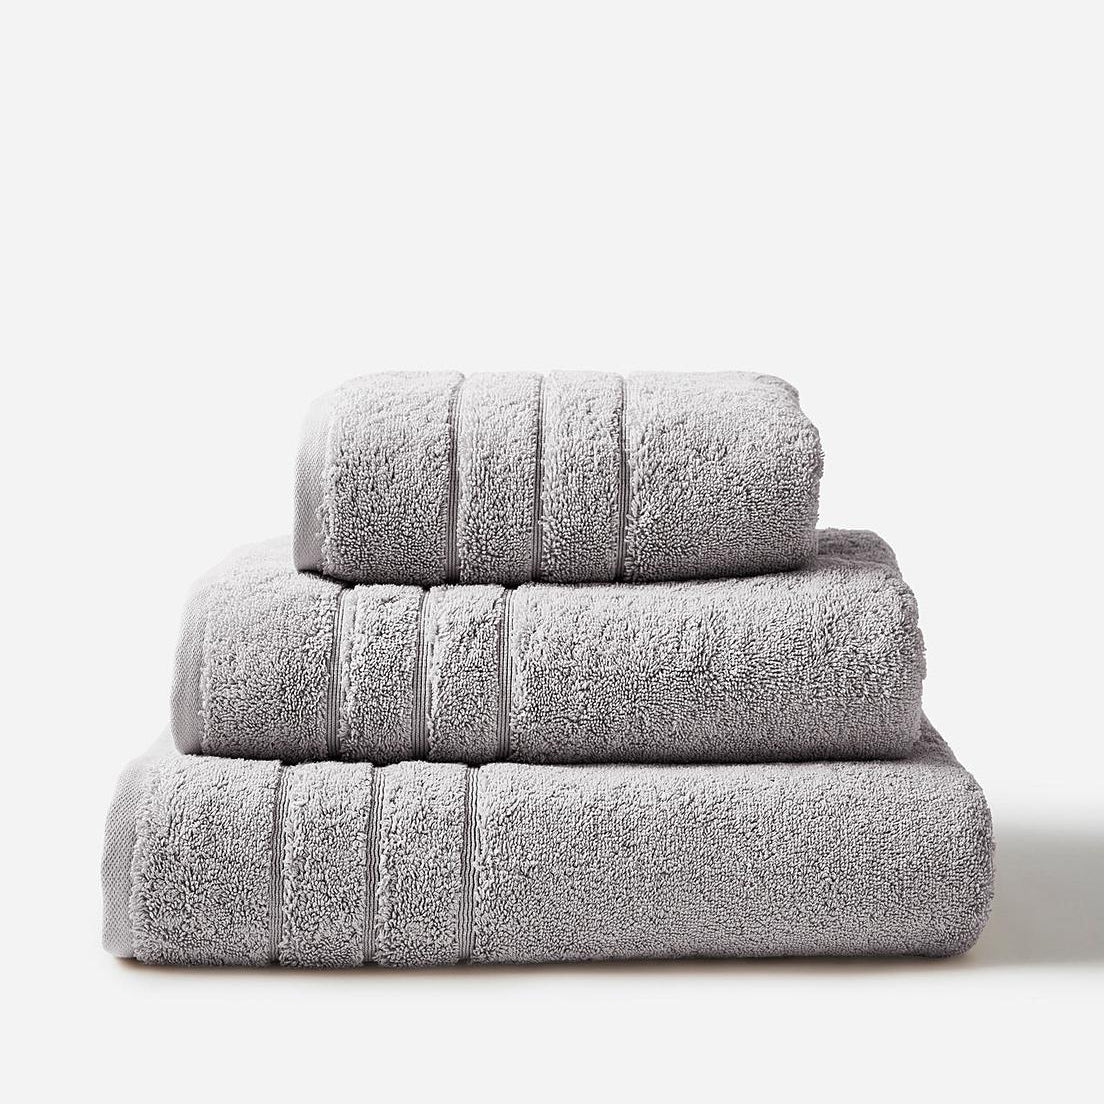 Hotel Quality Towels - Grey Bathroom Towels